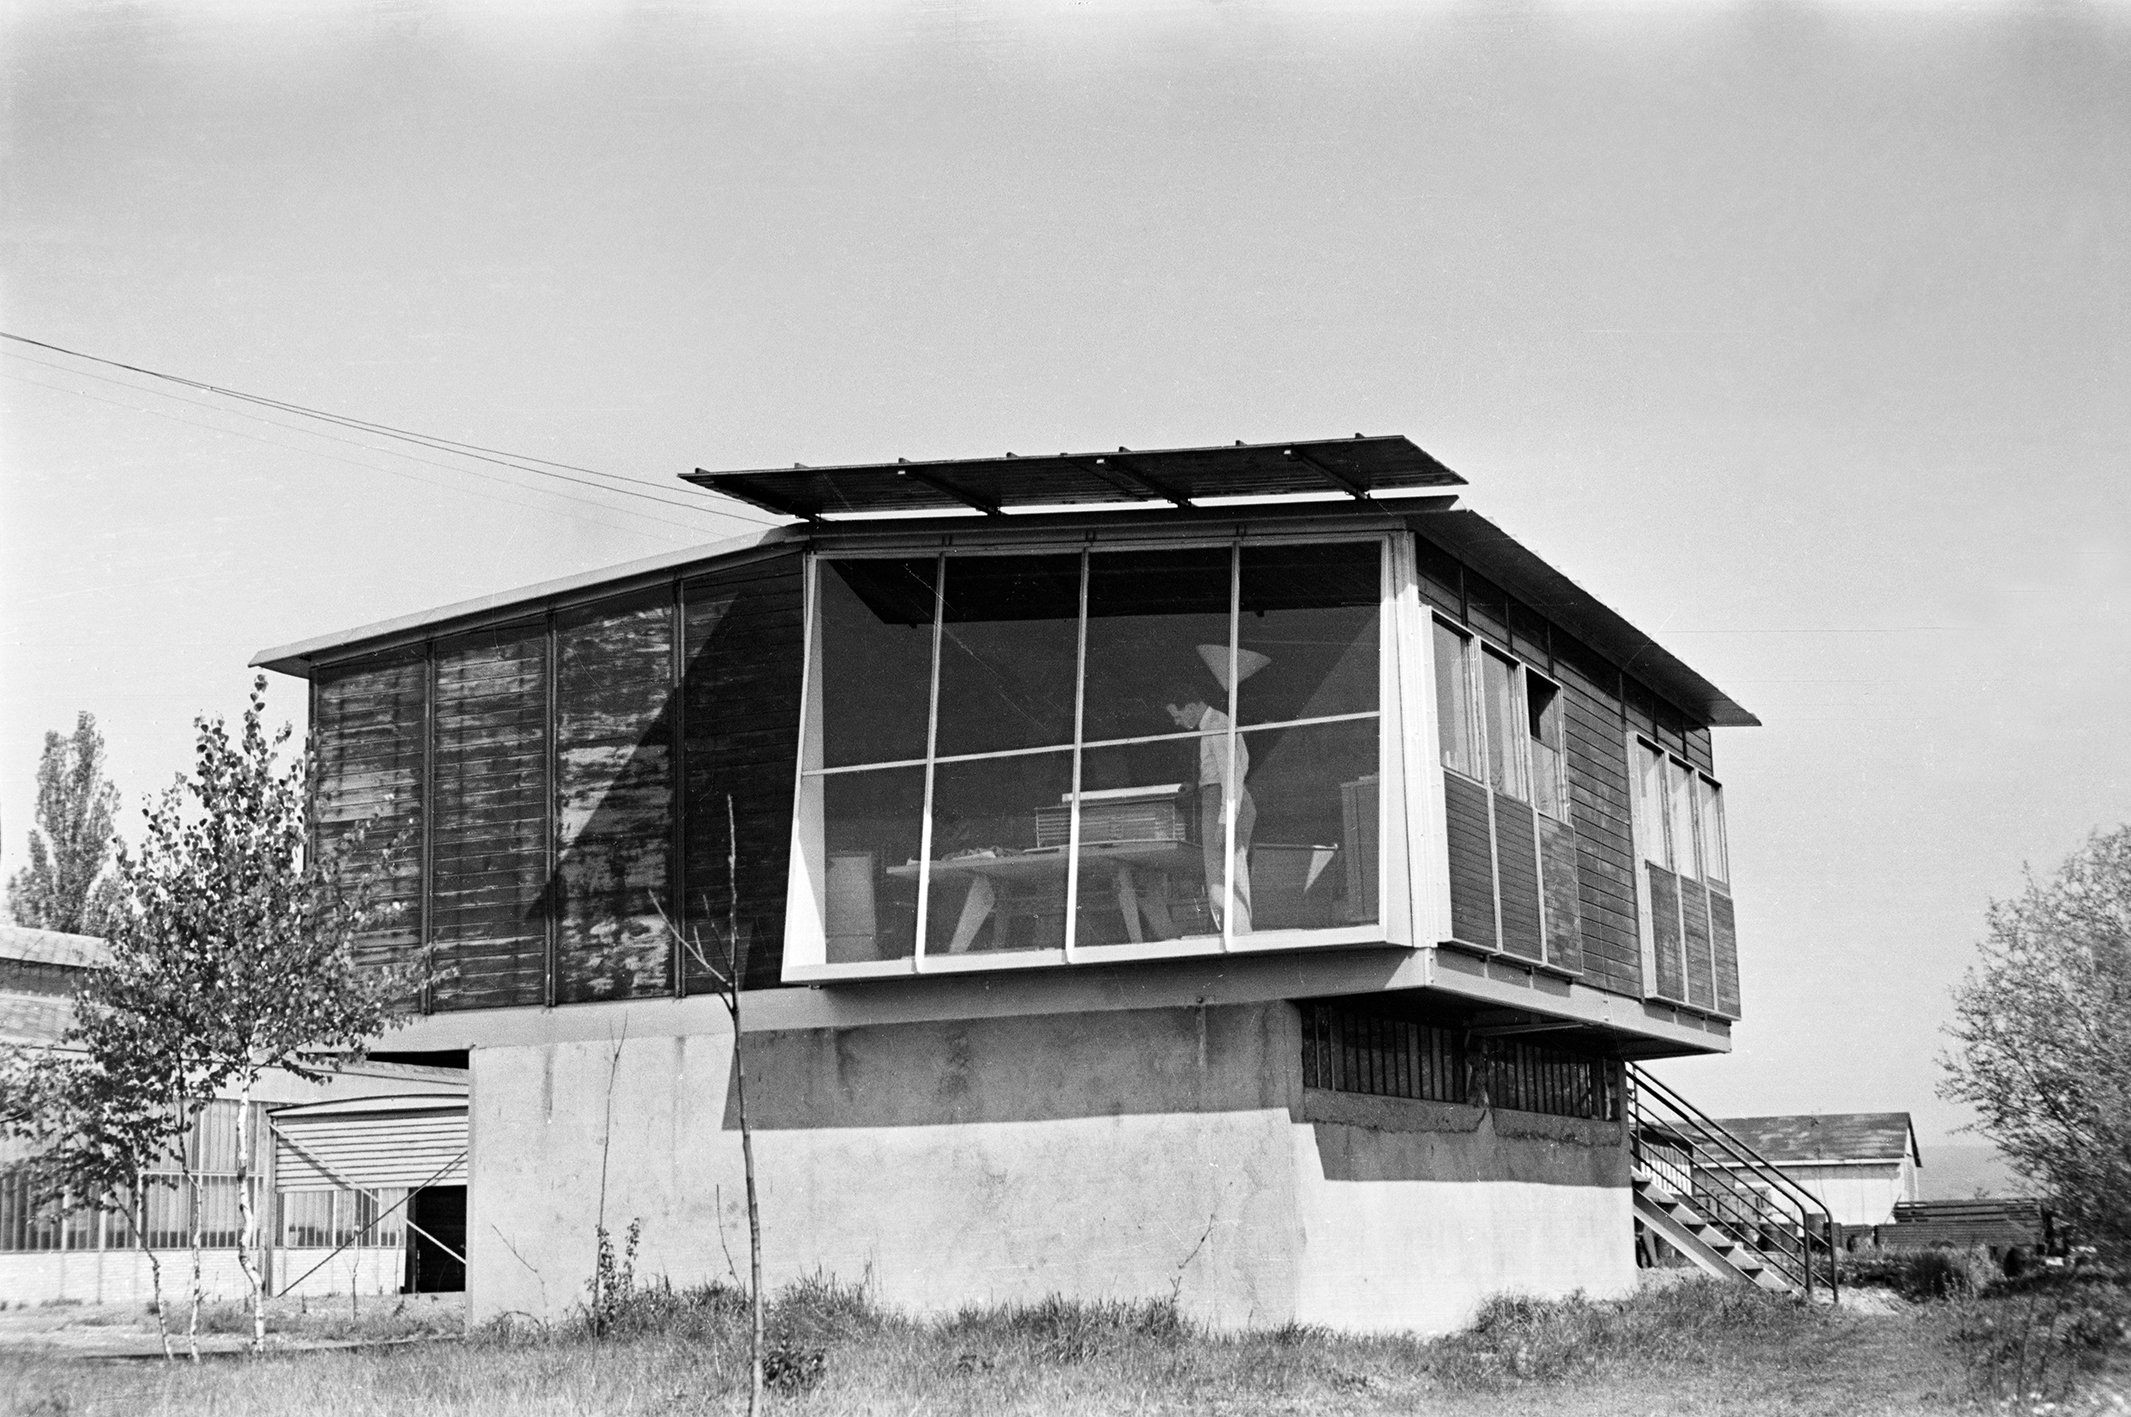 8x8 Demountable house, Jean Prouvé’s office, Maxéville, ca. 1950.